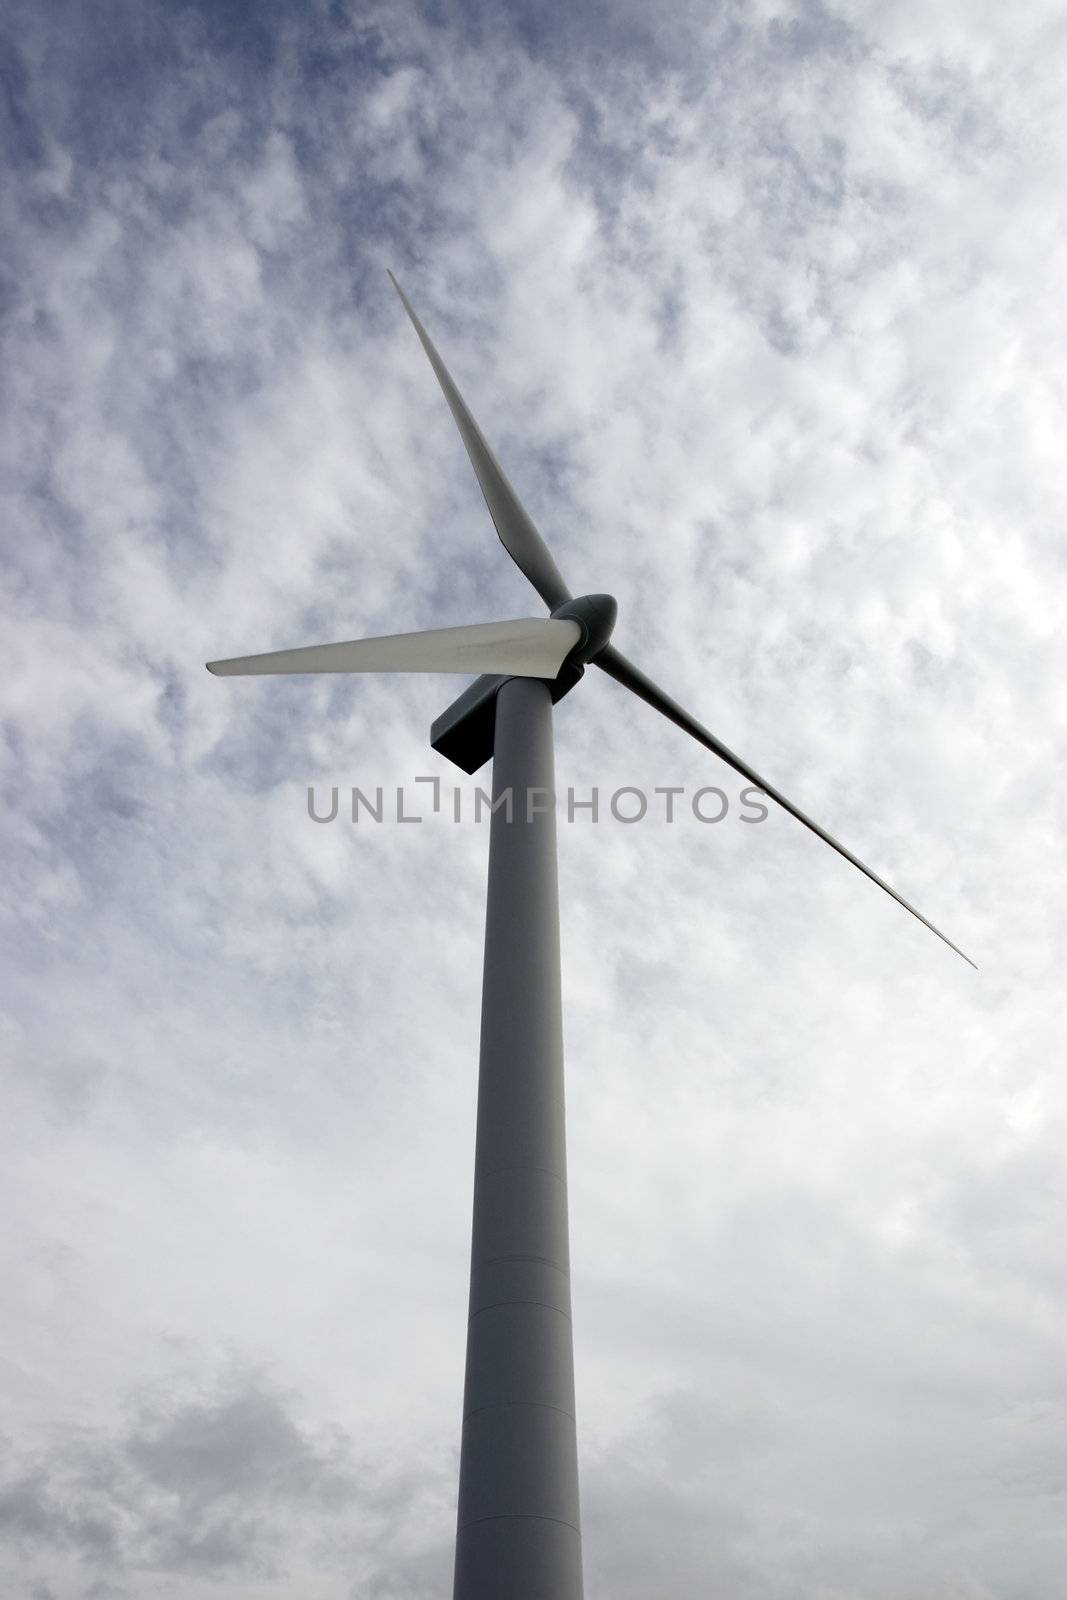 a wind turbine against a calm cloudy sky